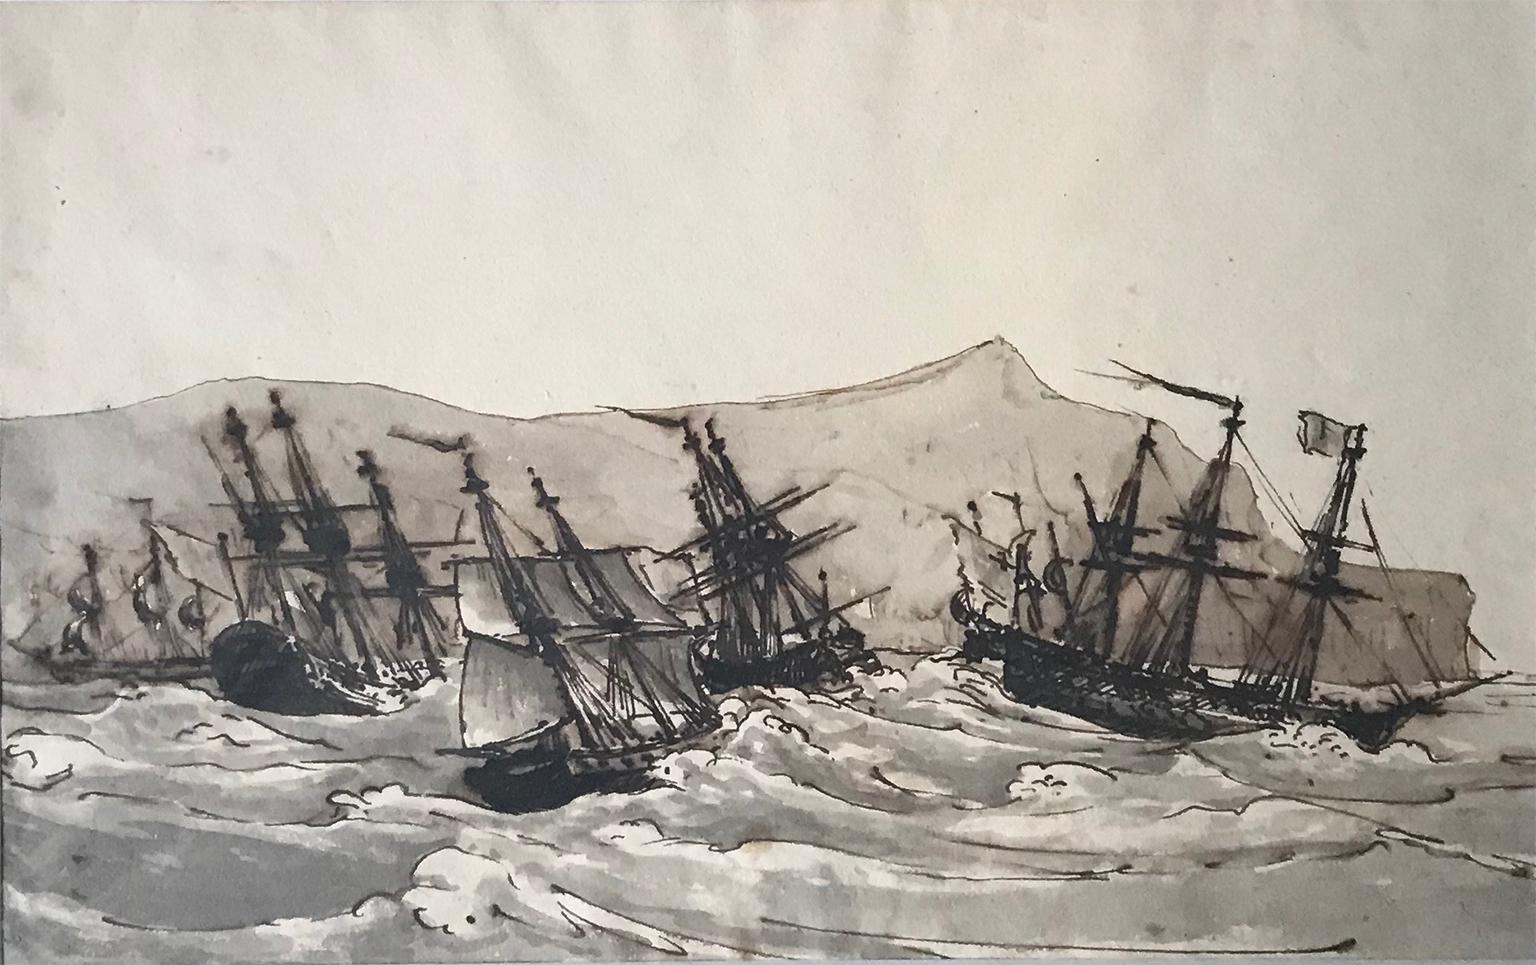 Unknown Landscape Art - Shipping off the coast - 19th century marine, follower of Willem Van de Velde